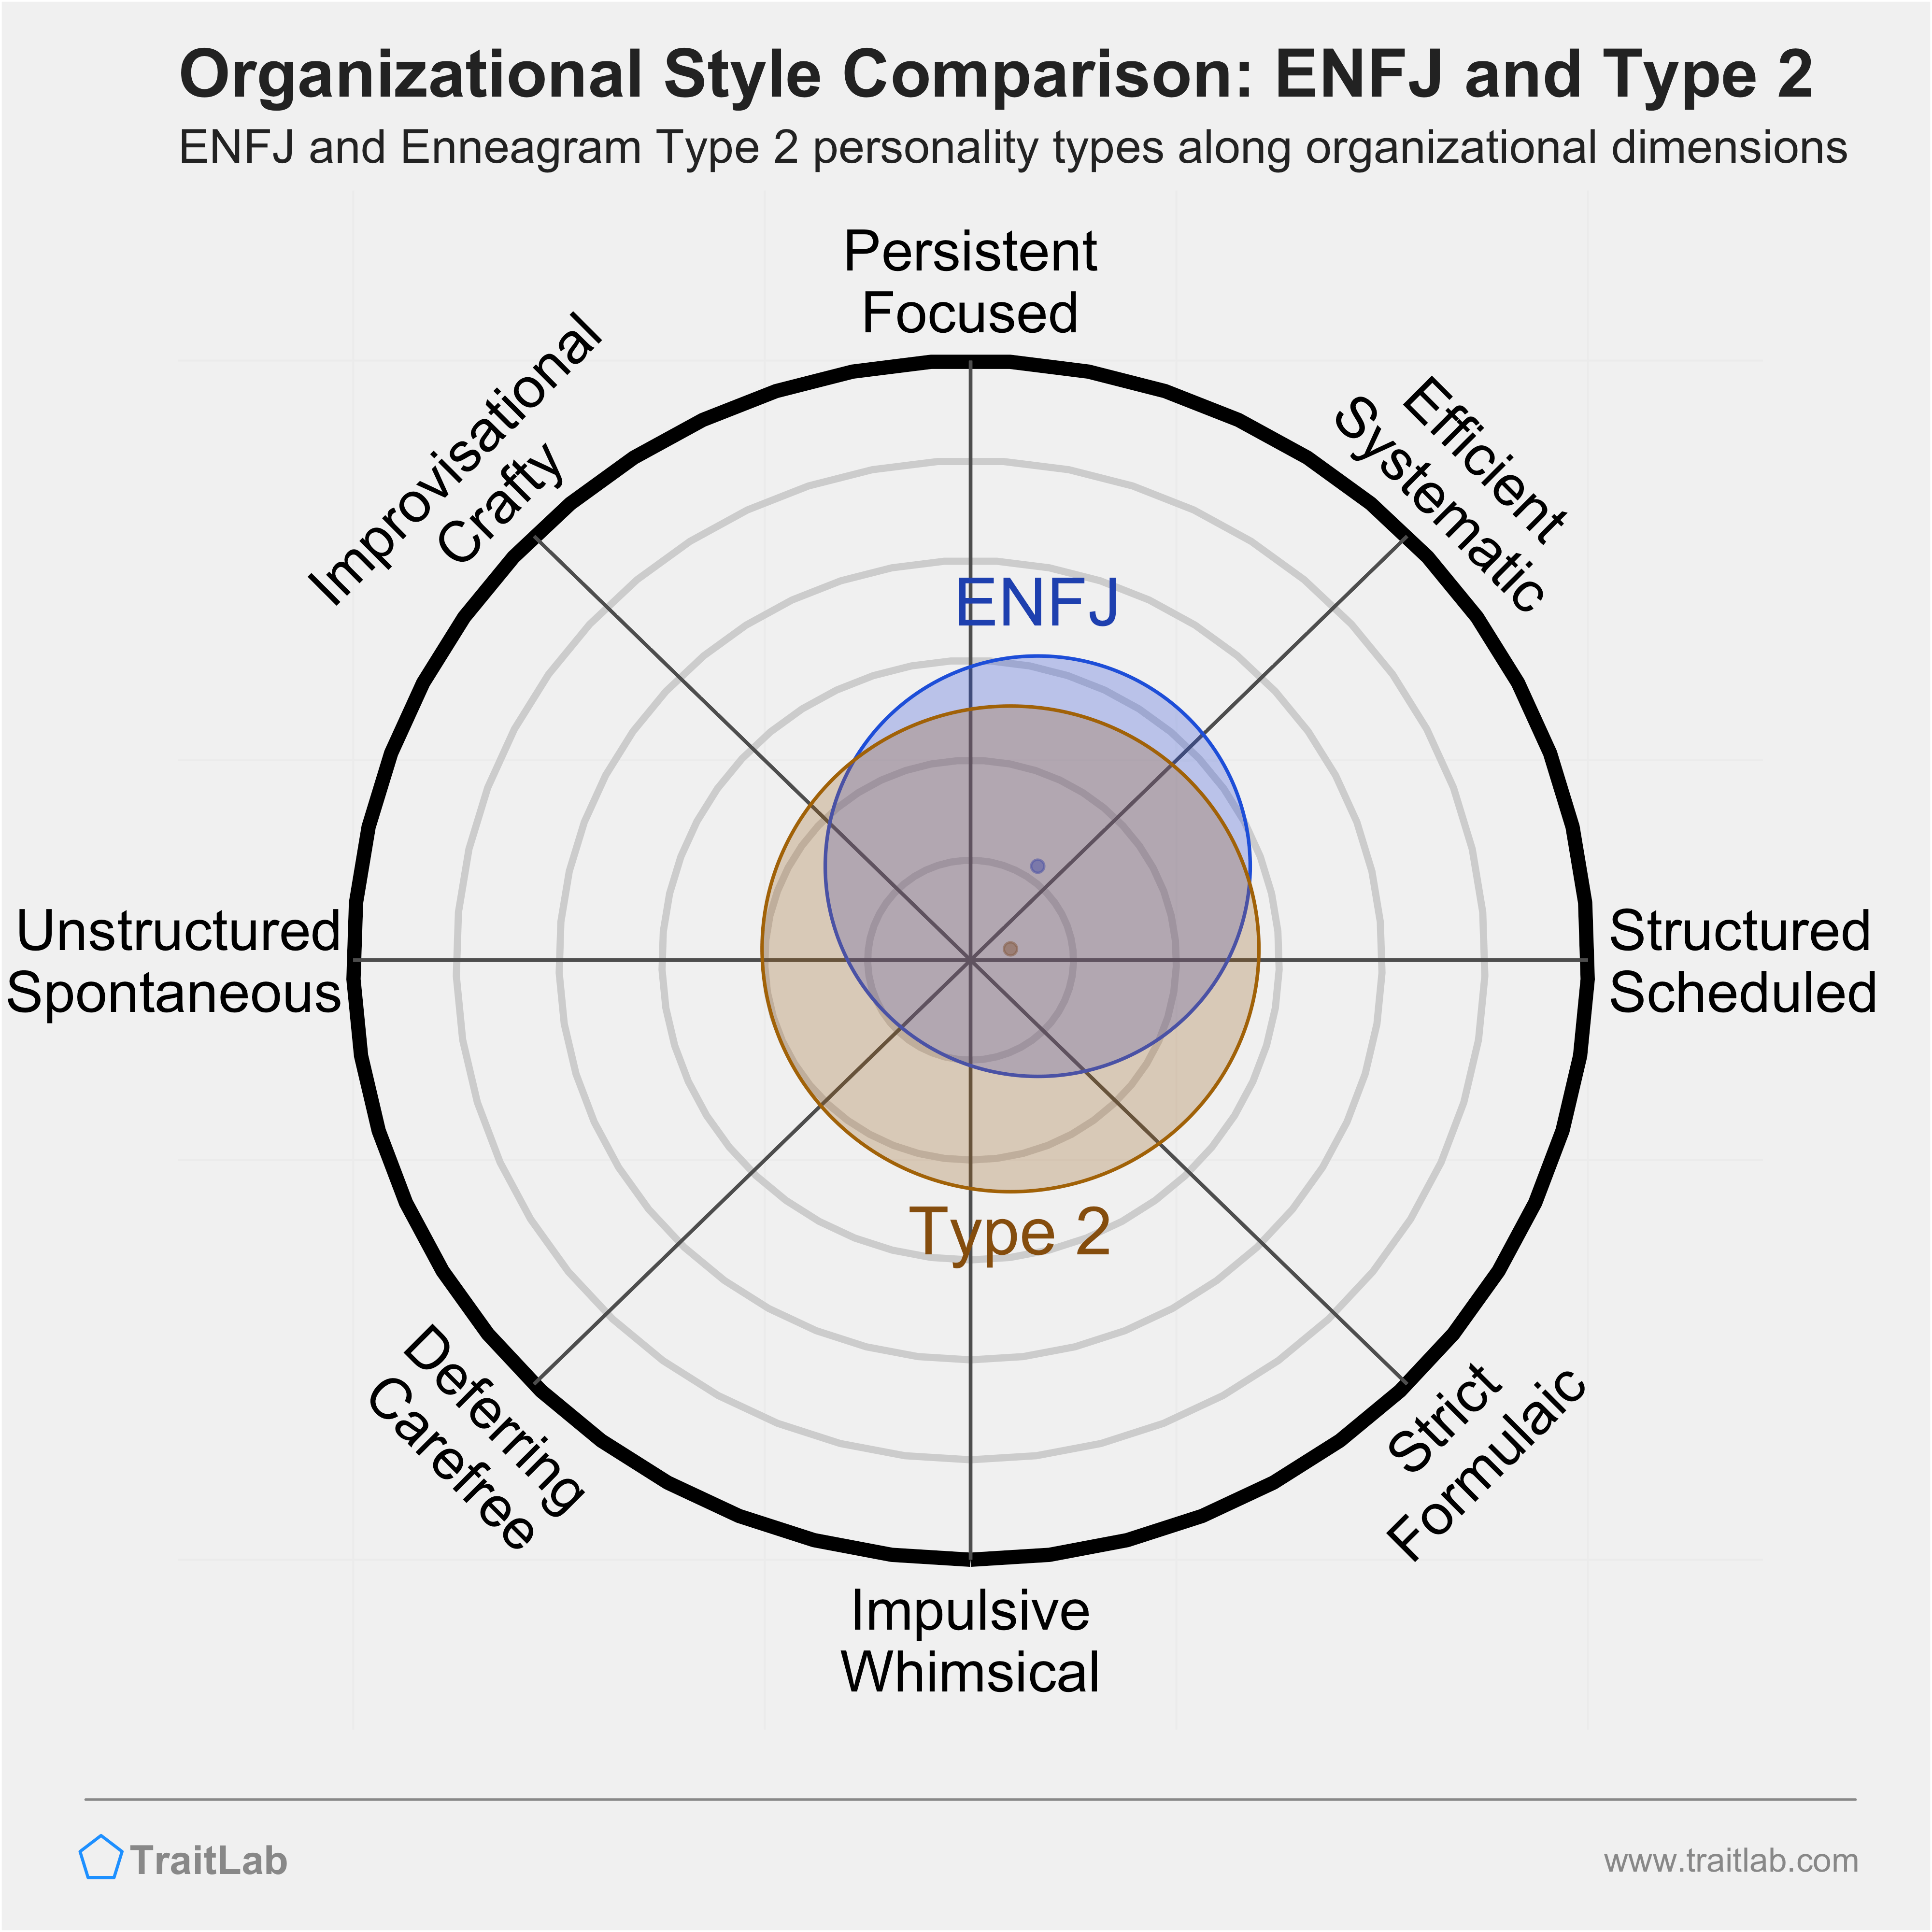 ENFJ and Type 2 comparison across organizational dimensions